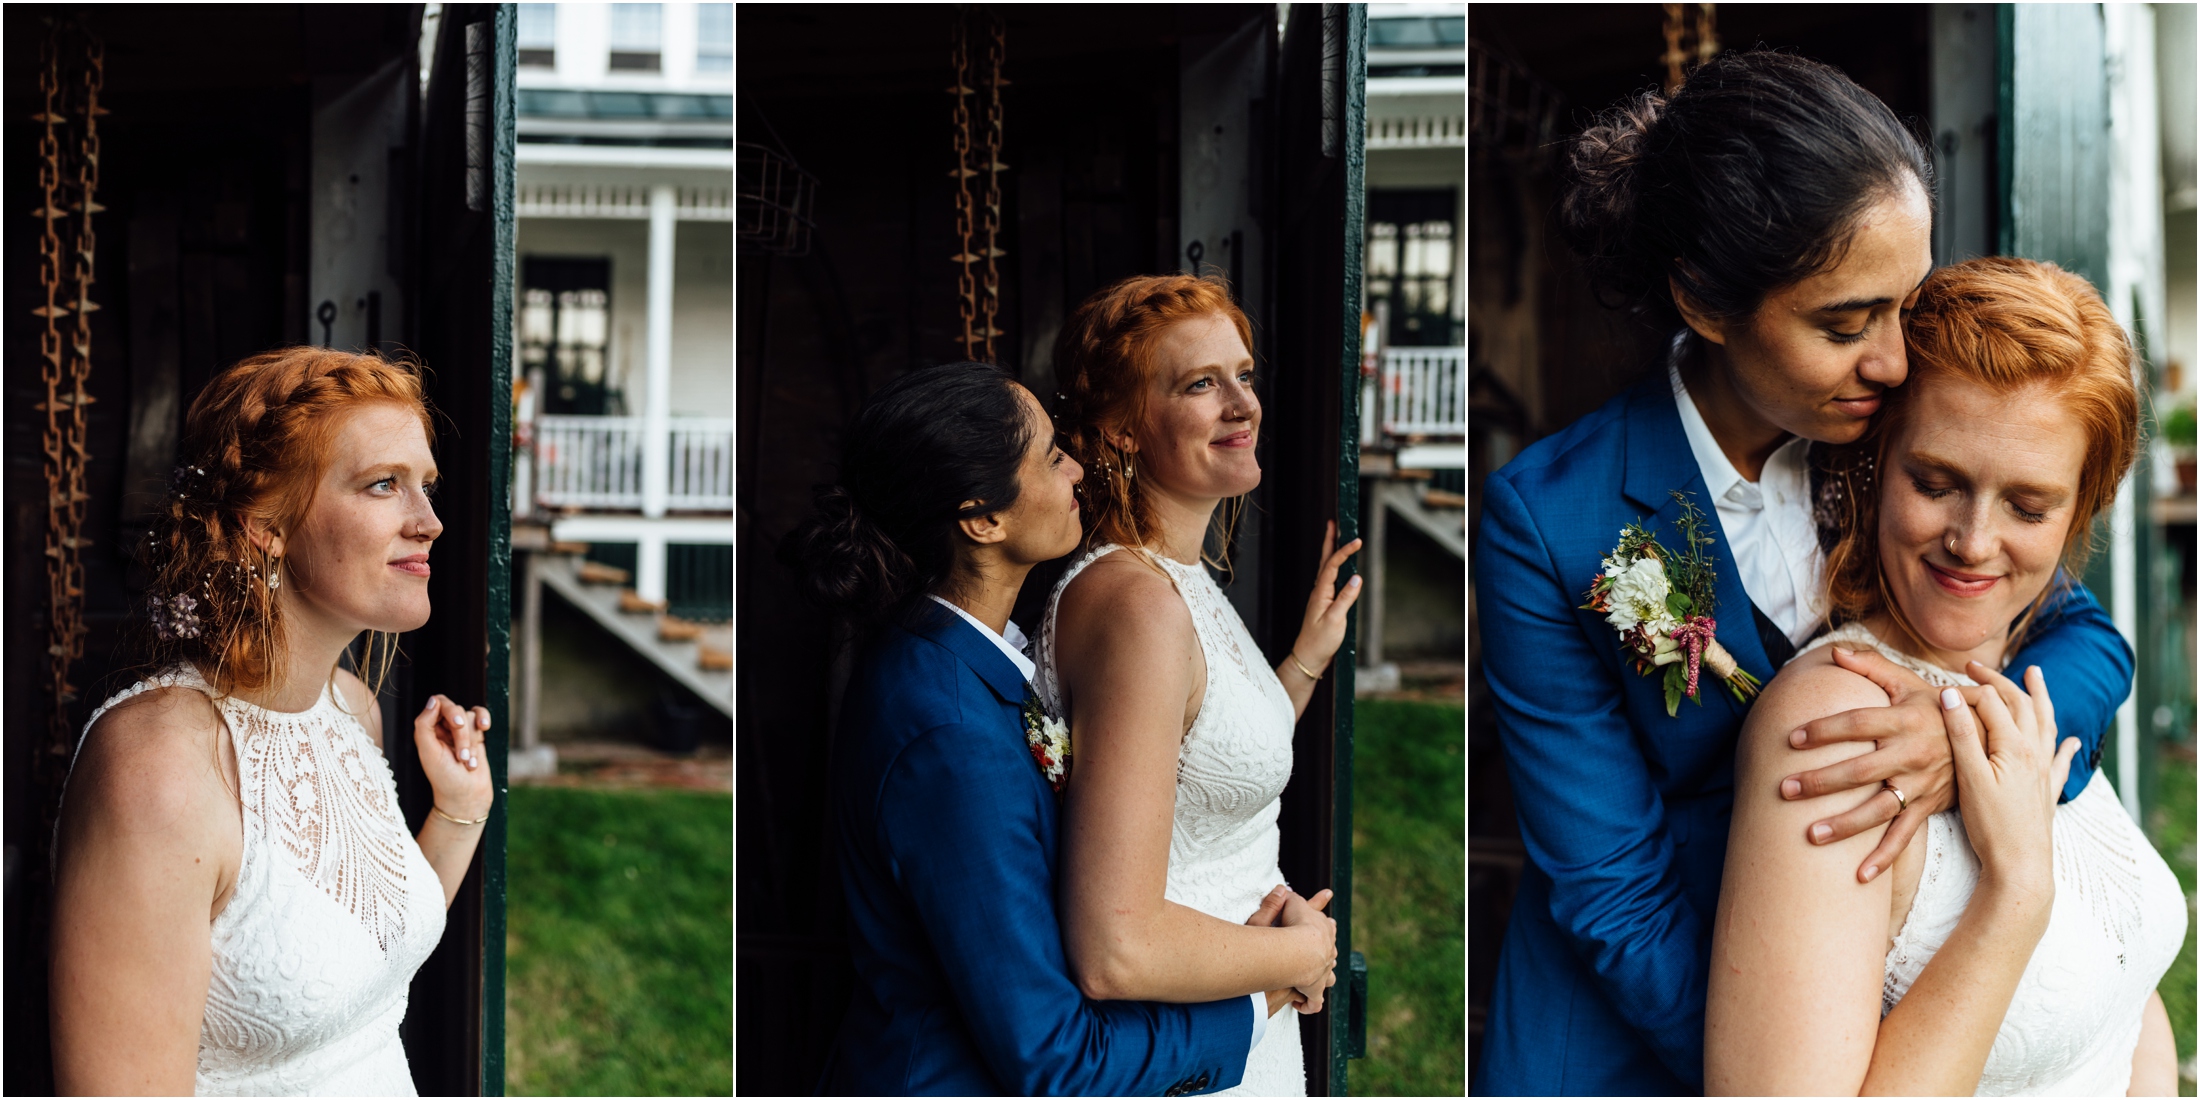 Kate_and_Michele_New_Hampshire_wedding_the_photo_farm_0630.jpg